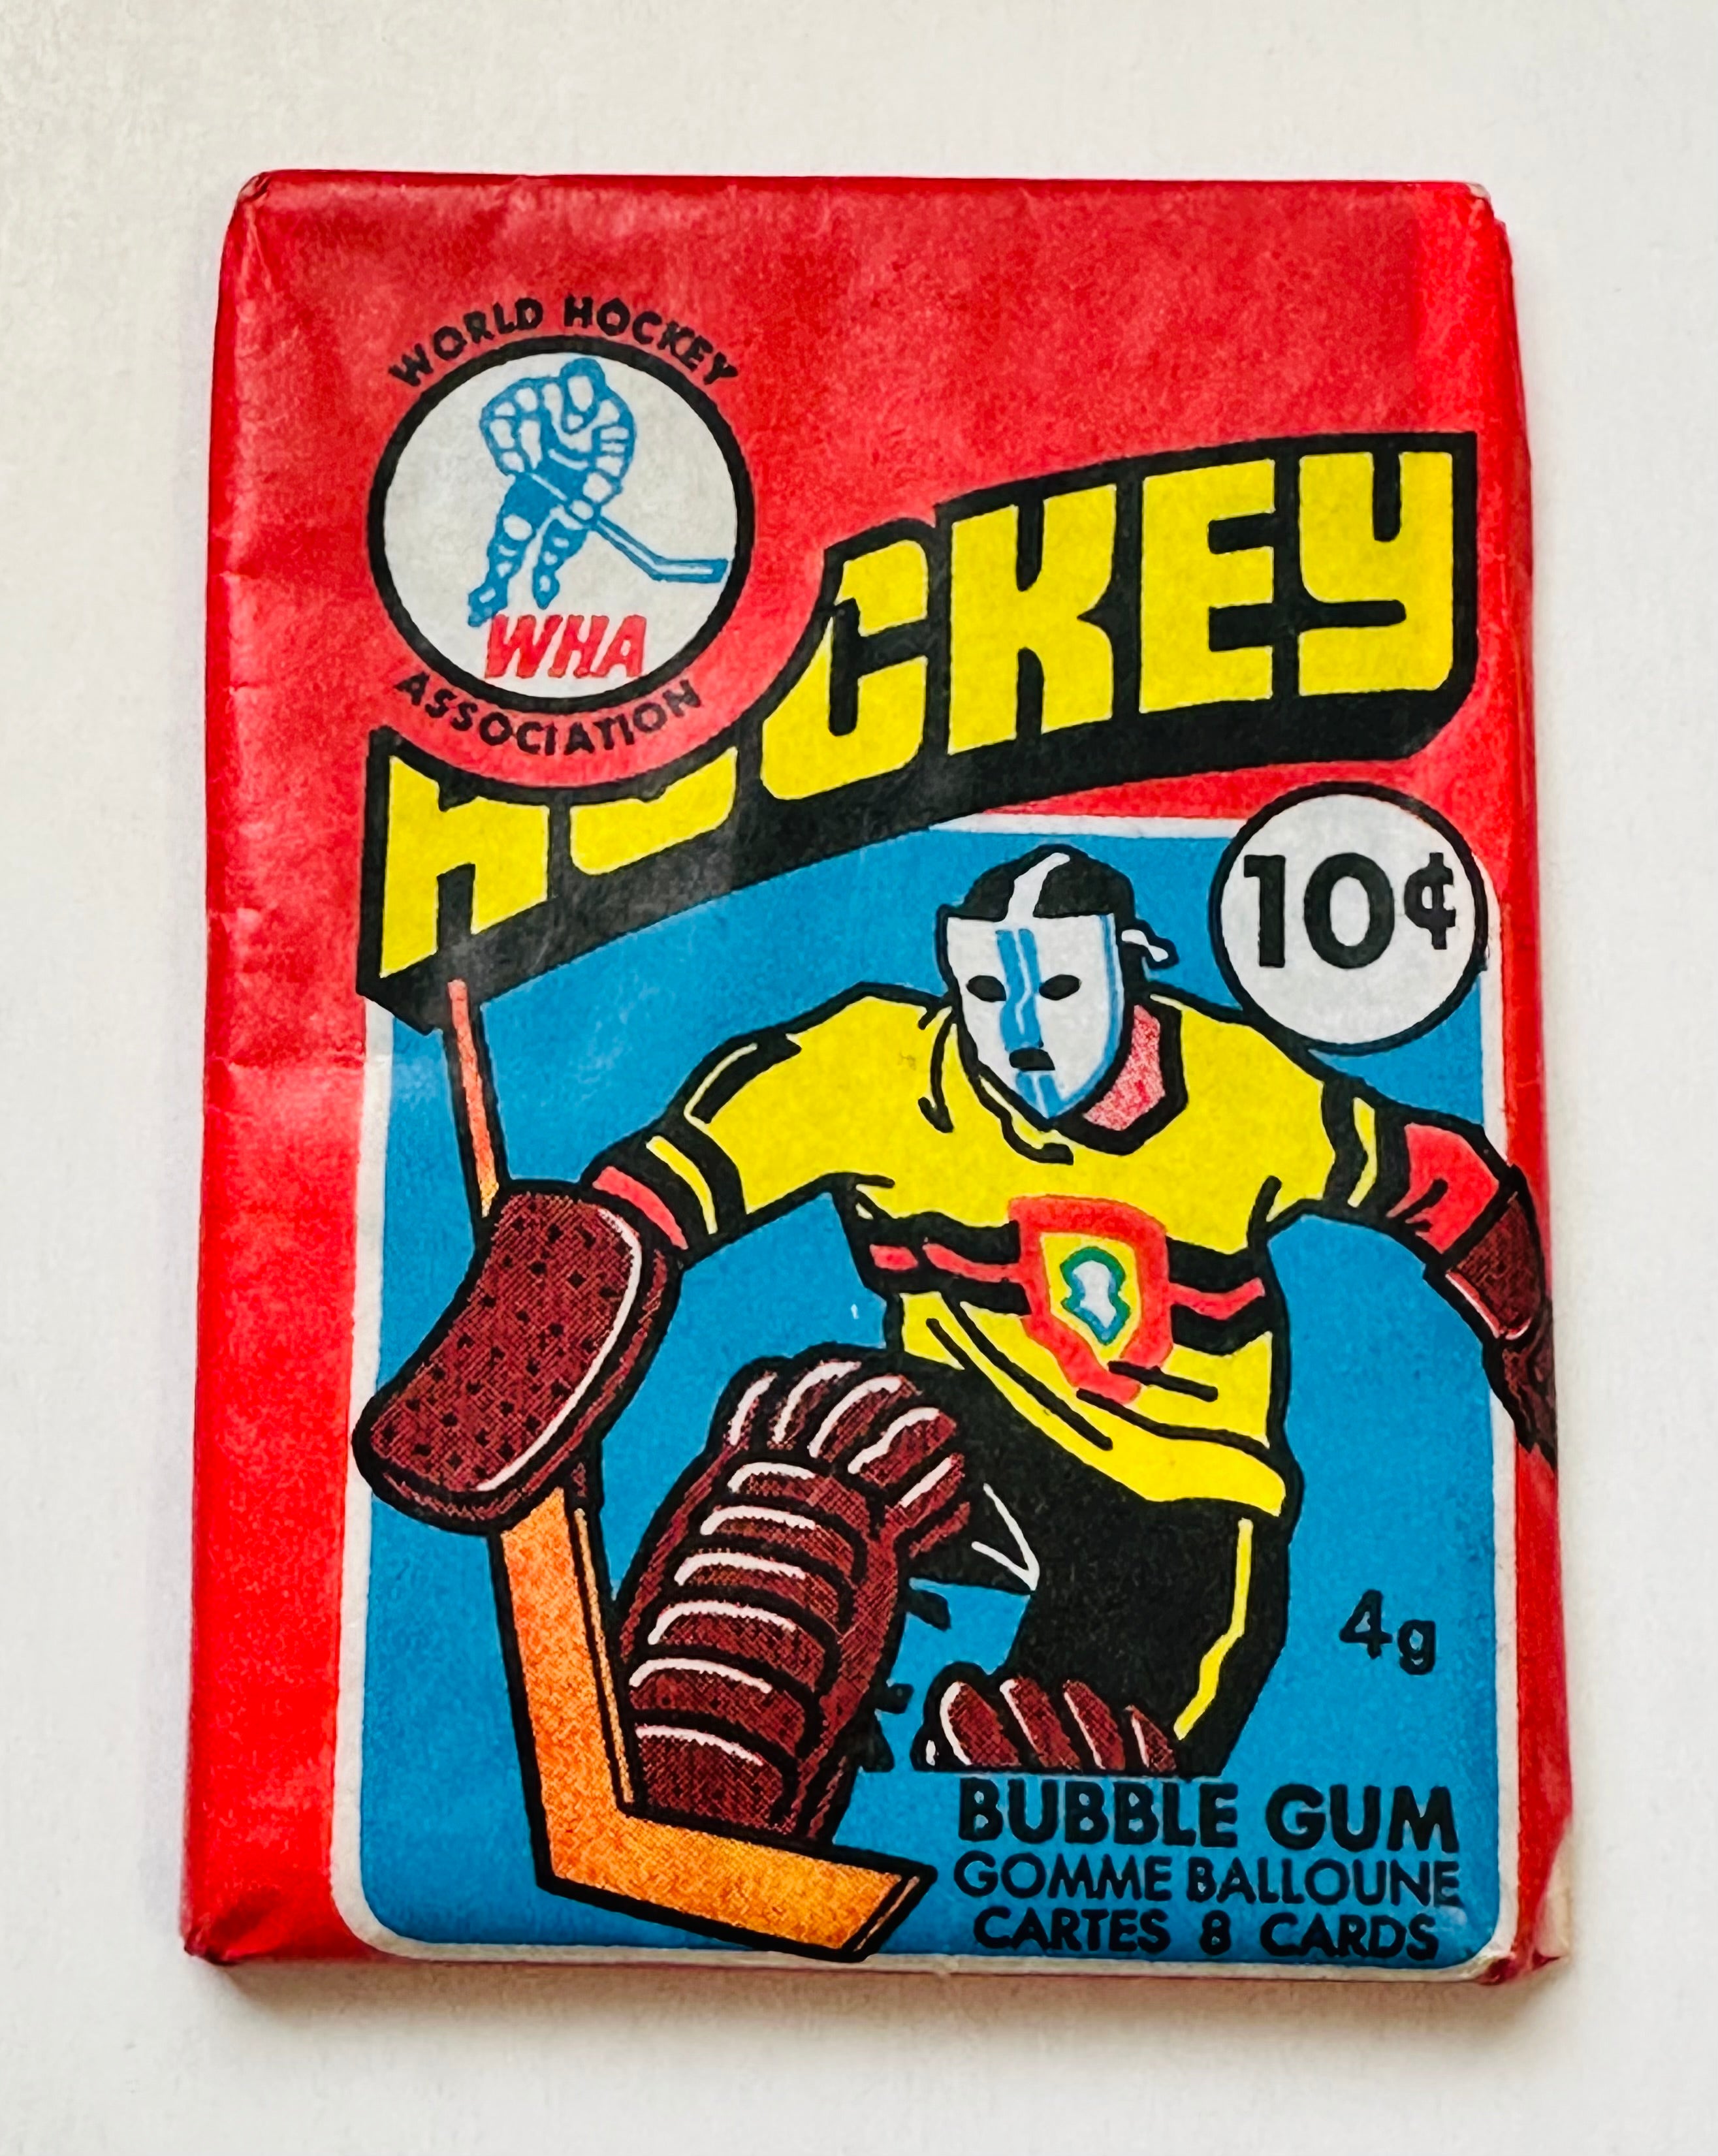 1976 Opc WHA rare clean sealed hockey pack